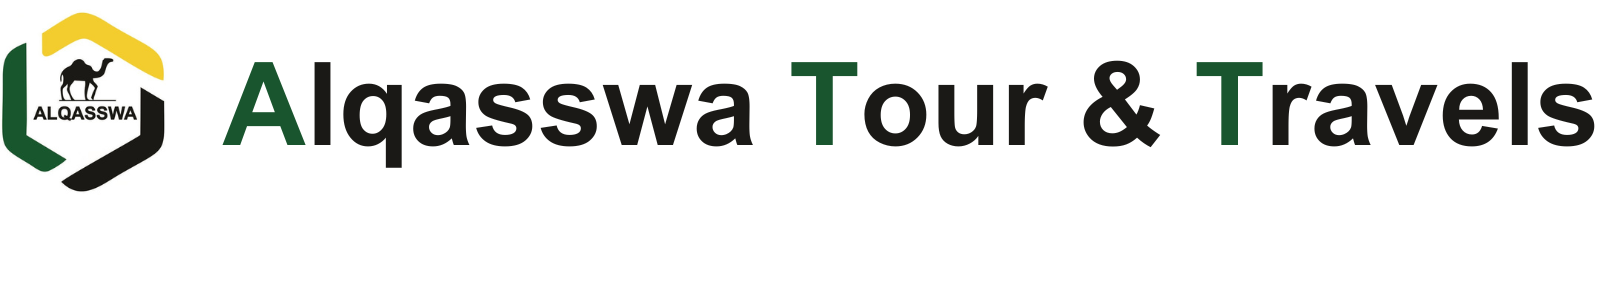 Alqasswa Tour and Travels